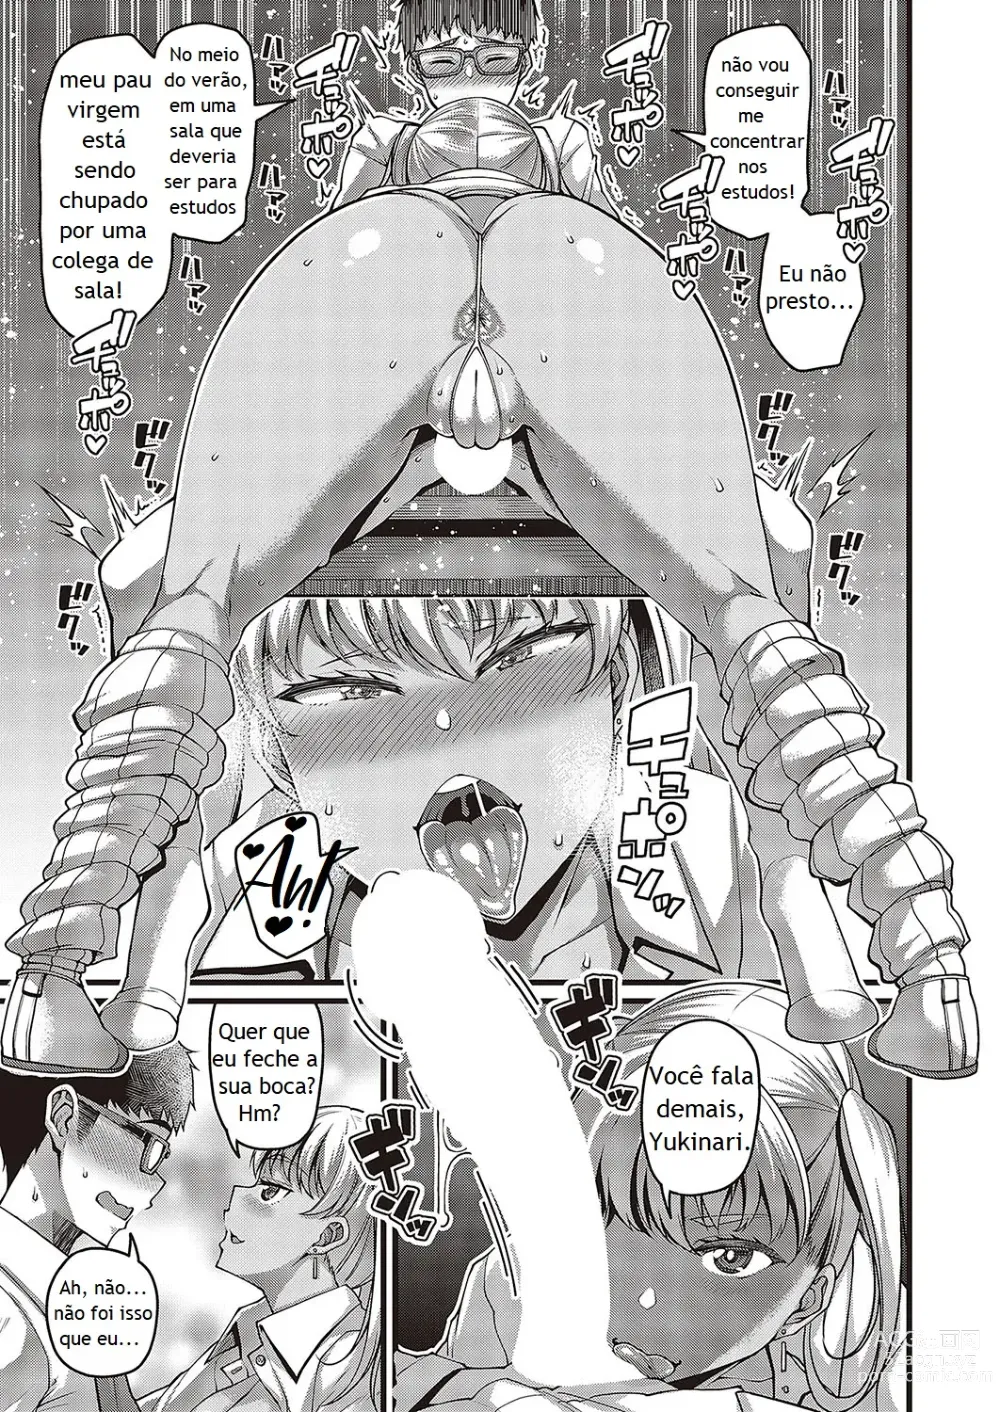 Page 9 of manga Way to Go!